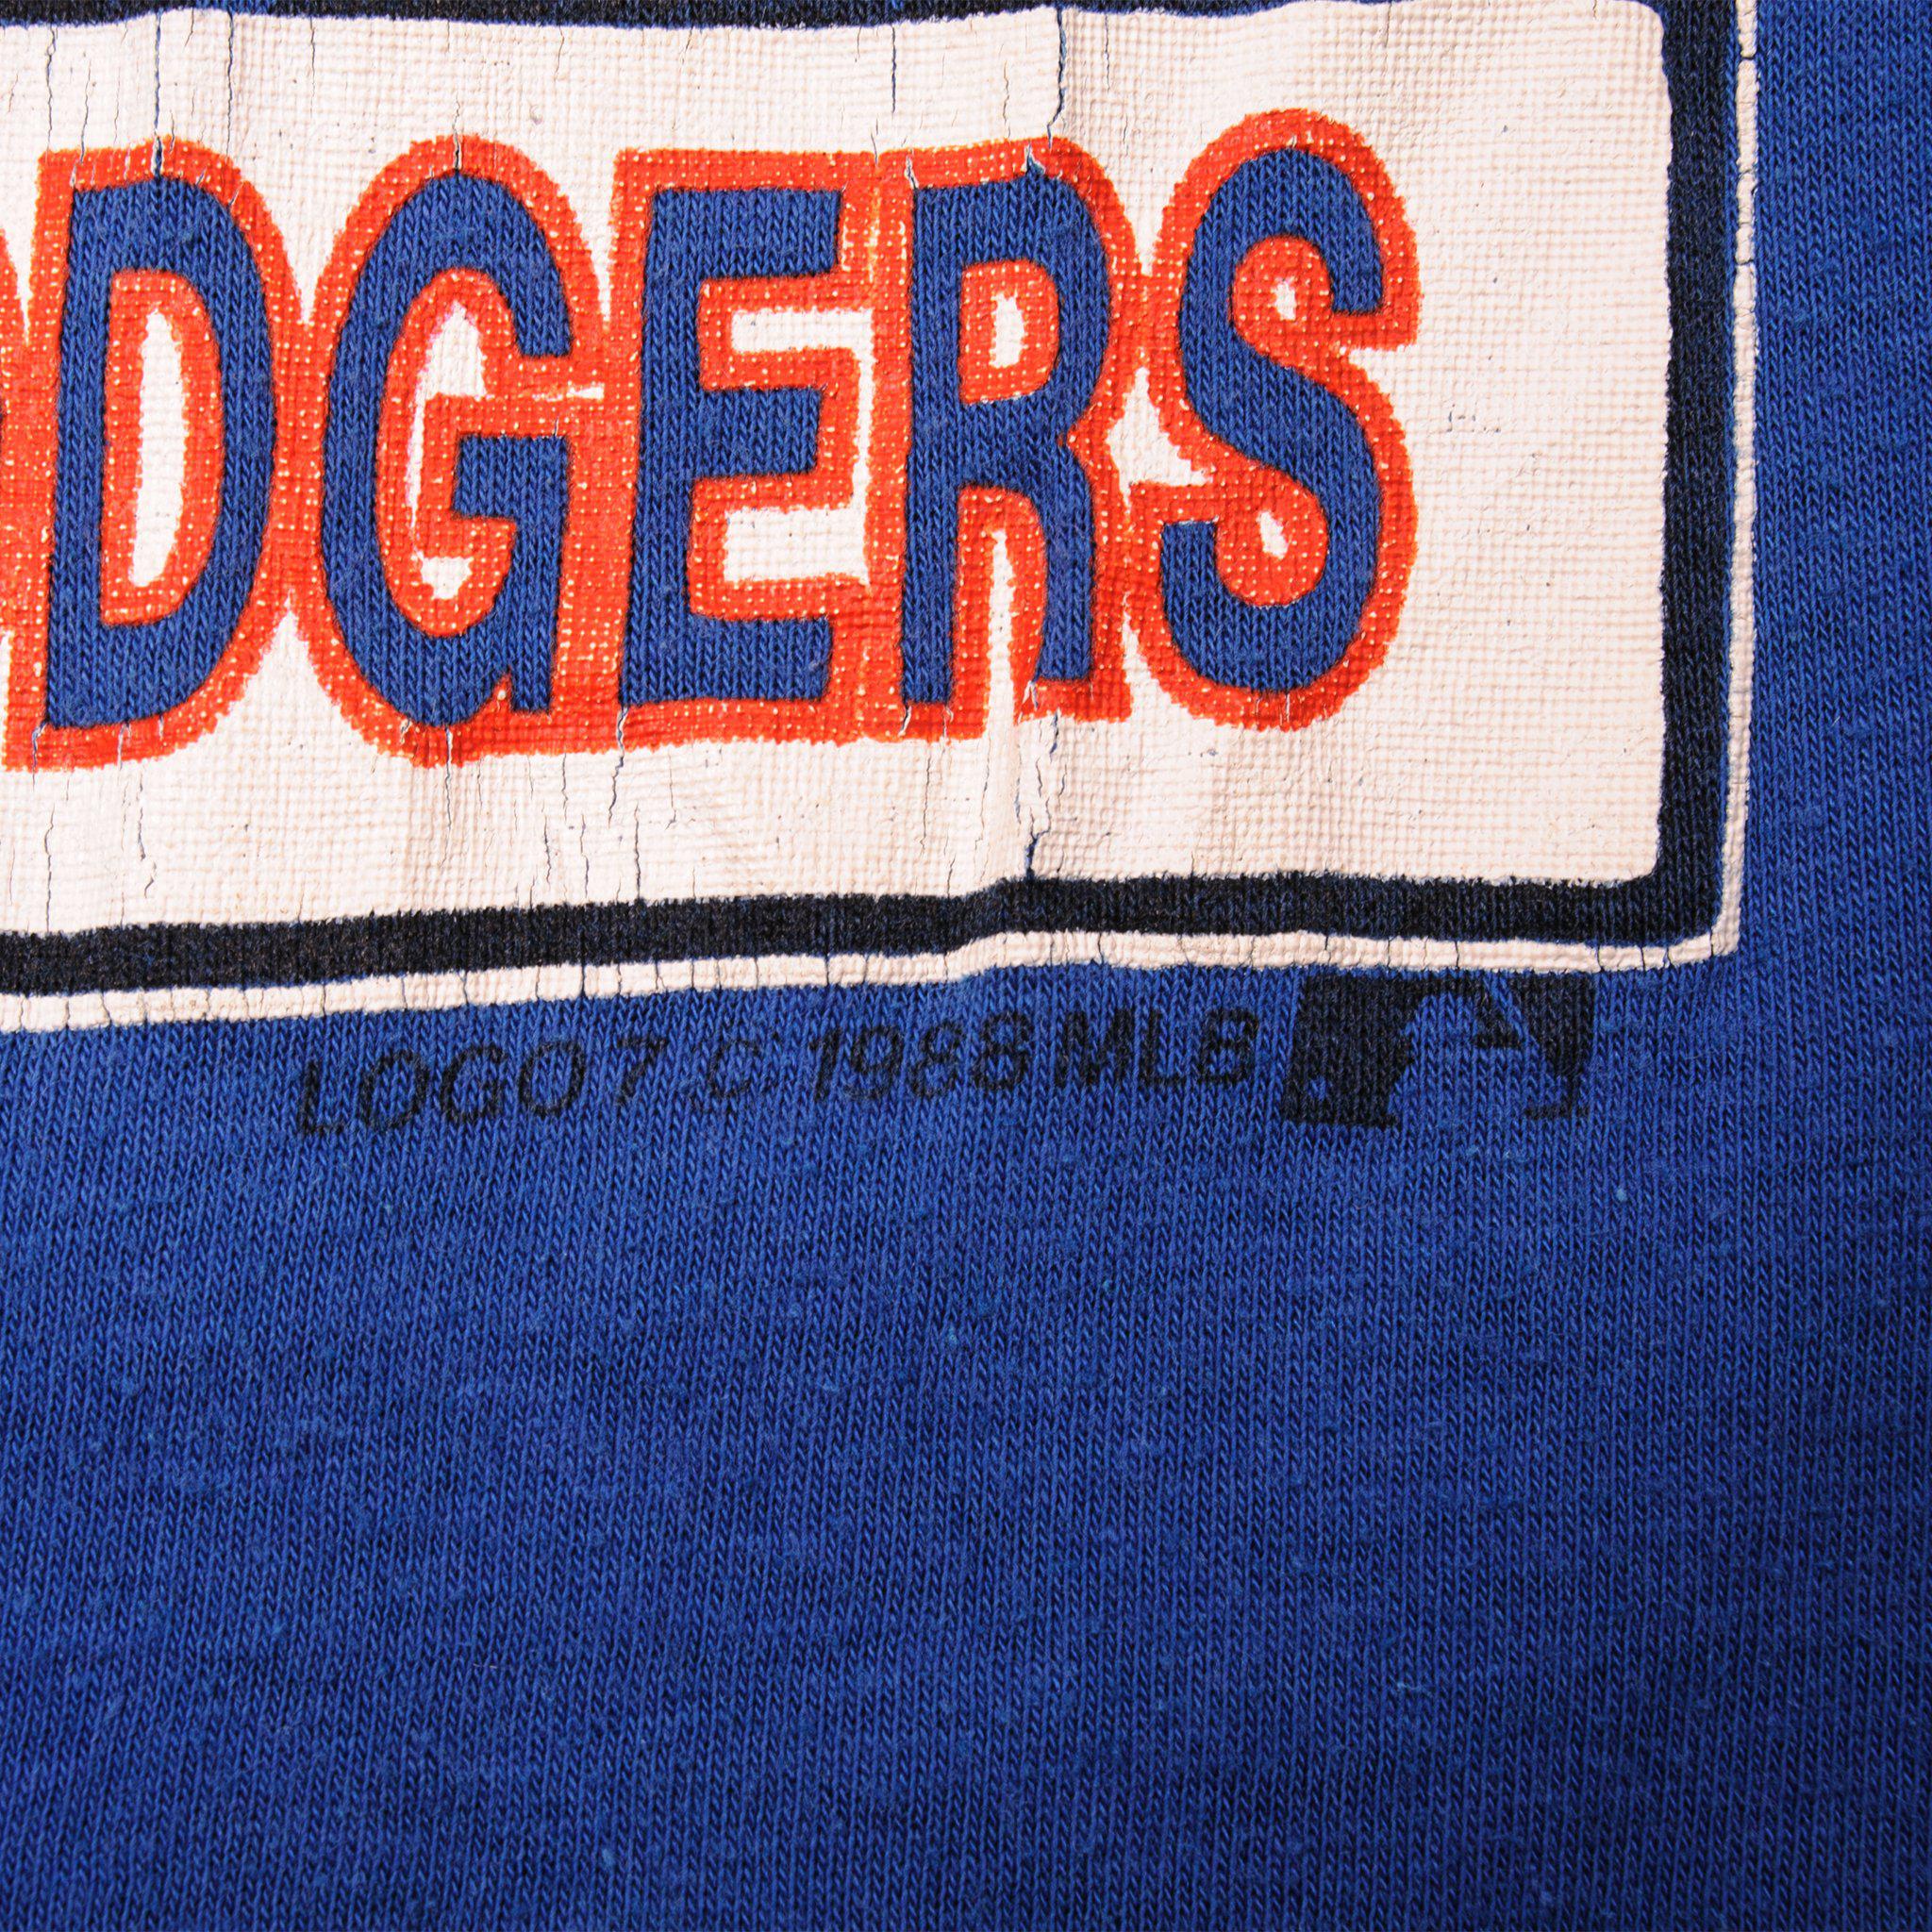 YOUTH Size Largenew Original Dodgers World Series Shirt 1988 -  Denmark